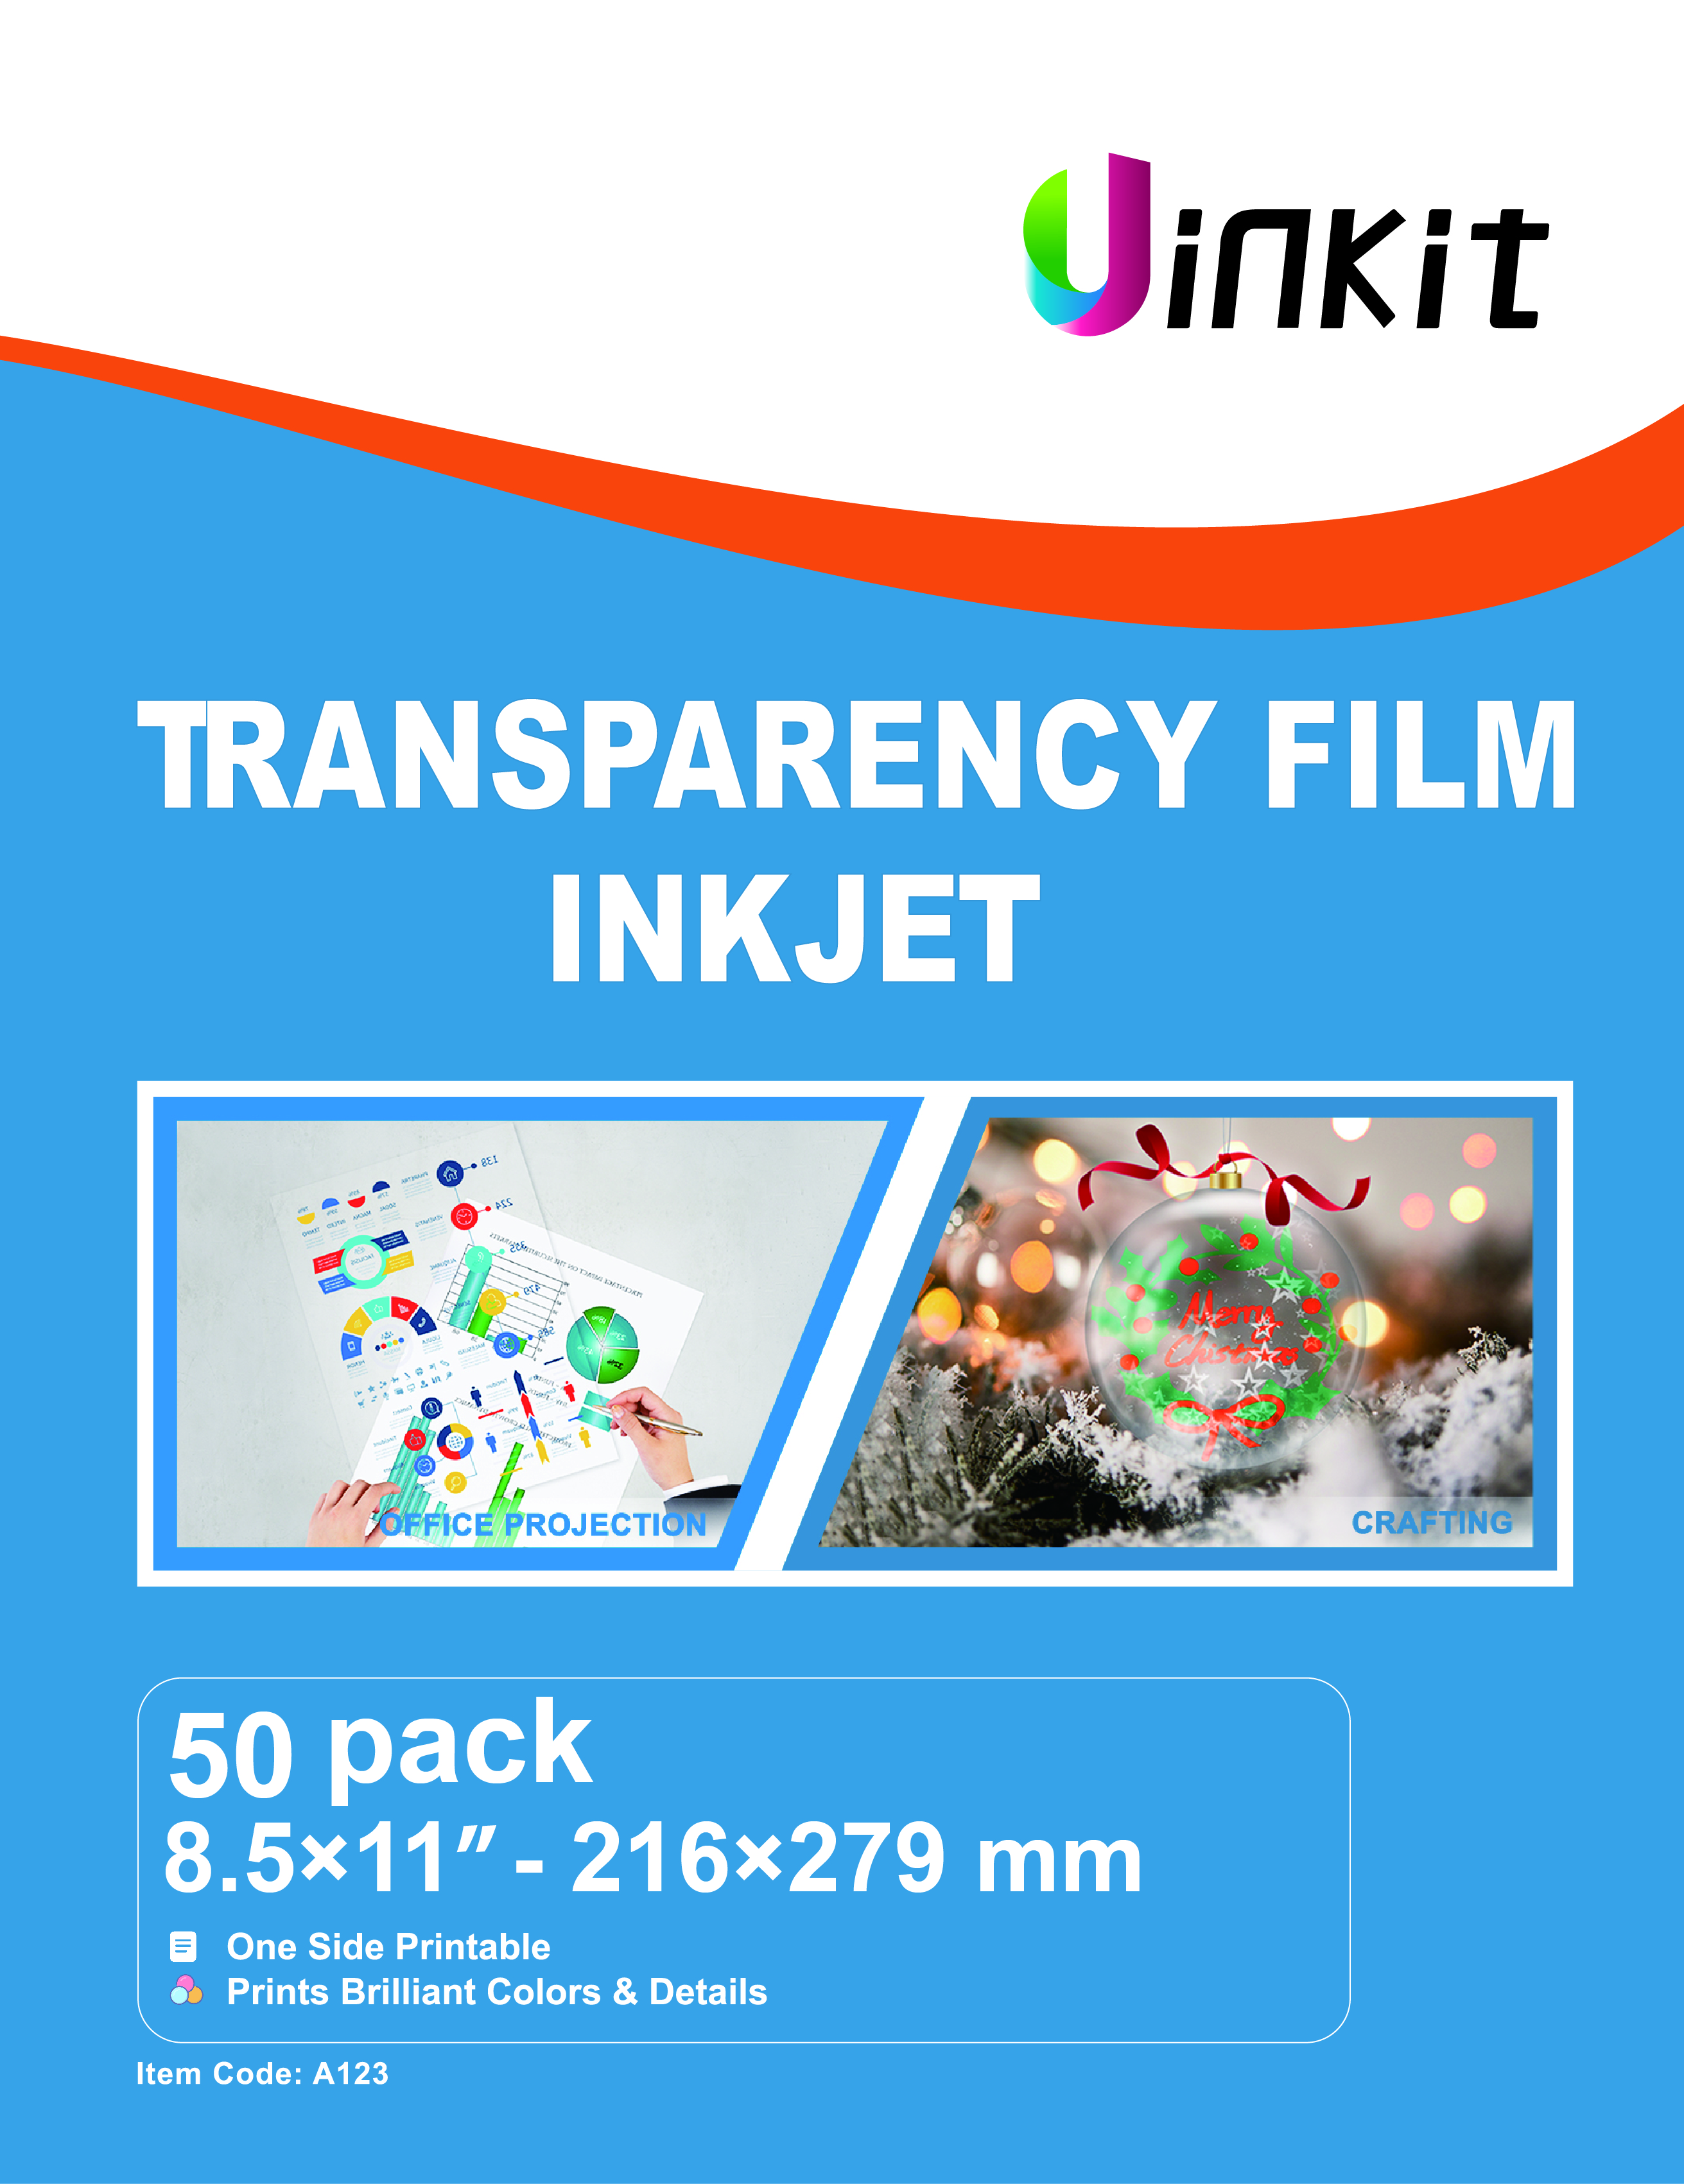 Winspeed Inkjet Transparency Film Printable 100% Clear Transparency Sheets,  Inkjet Transparency Film for Screen Printing, 25 Pack Overhead Projector